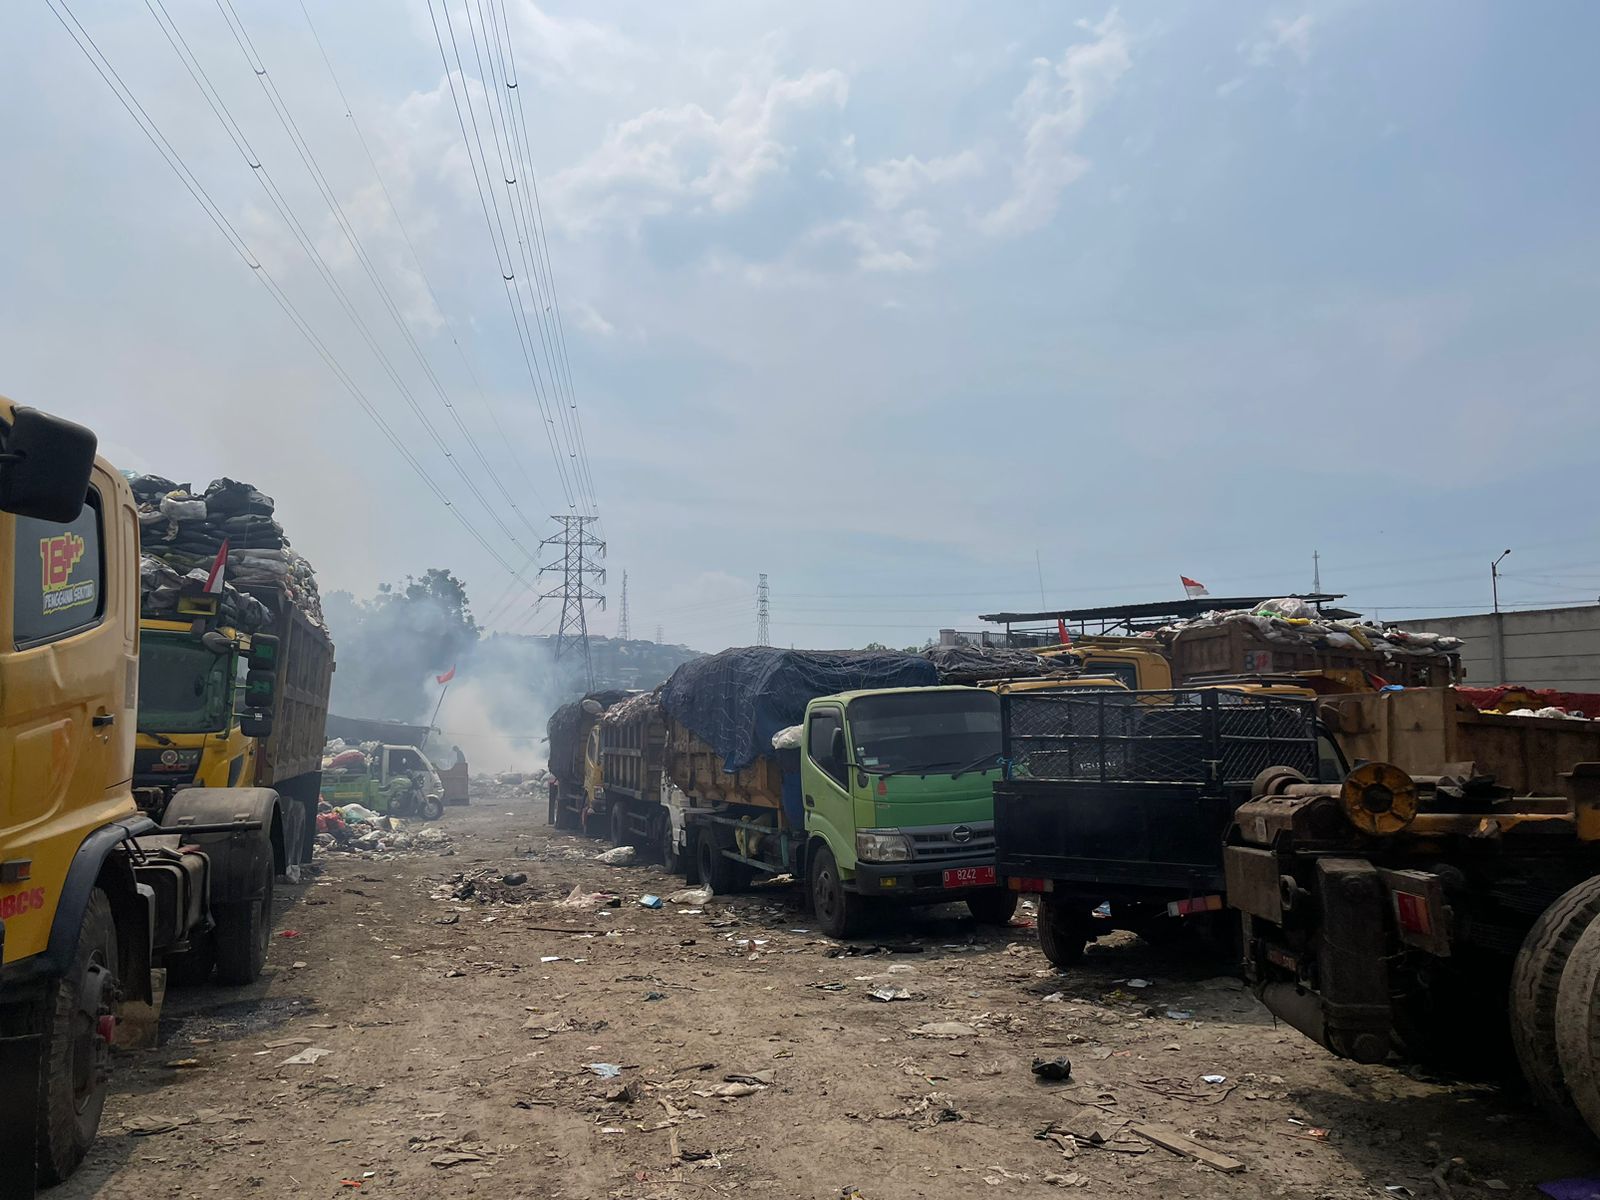 Bandung Barat Dapat Kuota Tambahan Pengangkutan Sampah 455 Ritase